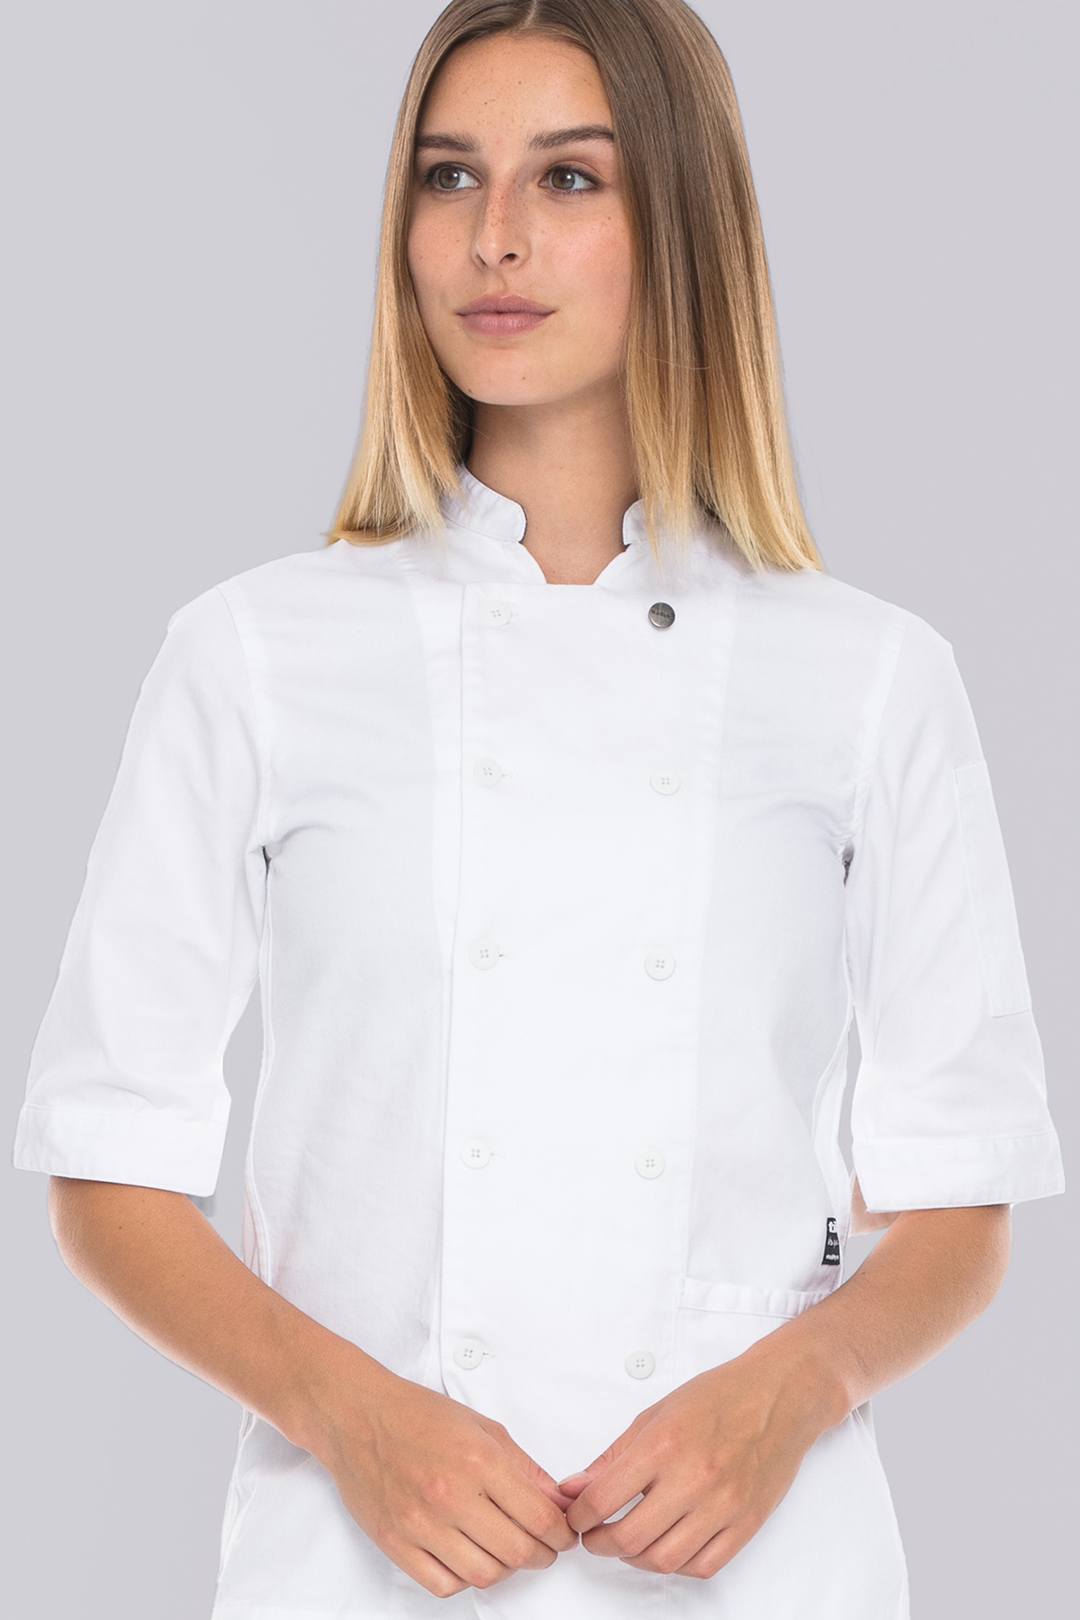 Women's Chef coat Short Sleeve 0478 Sizes XS to 3XL White 